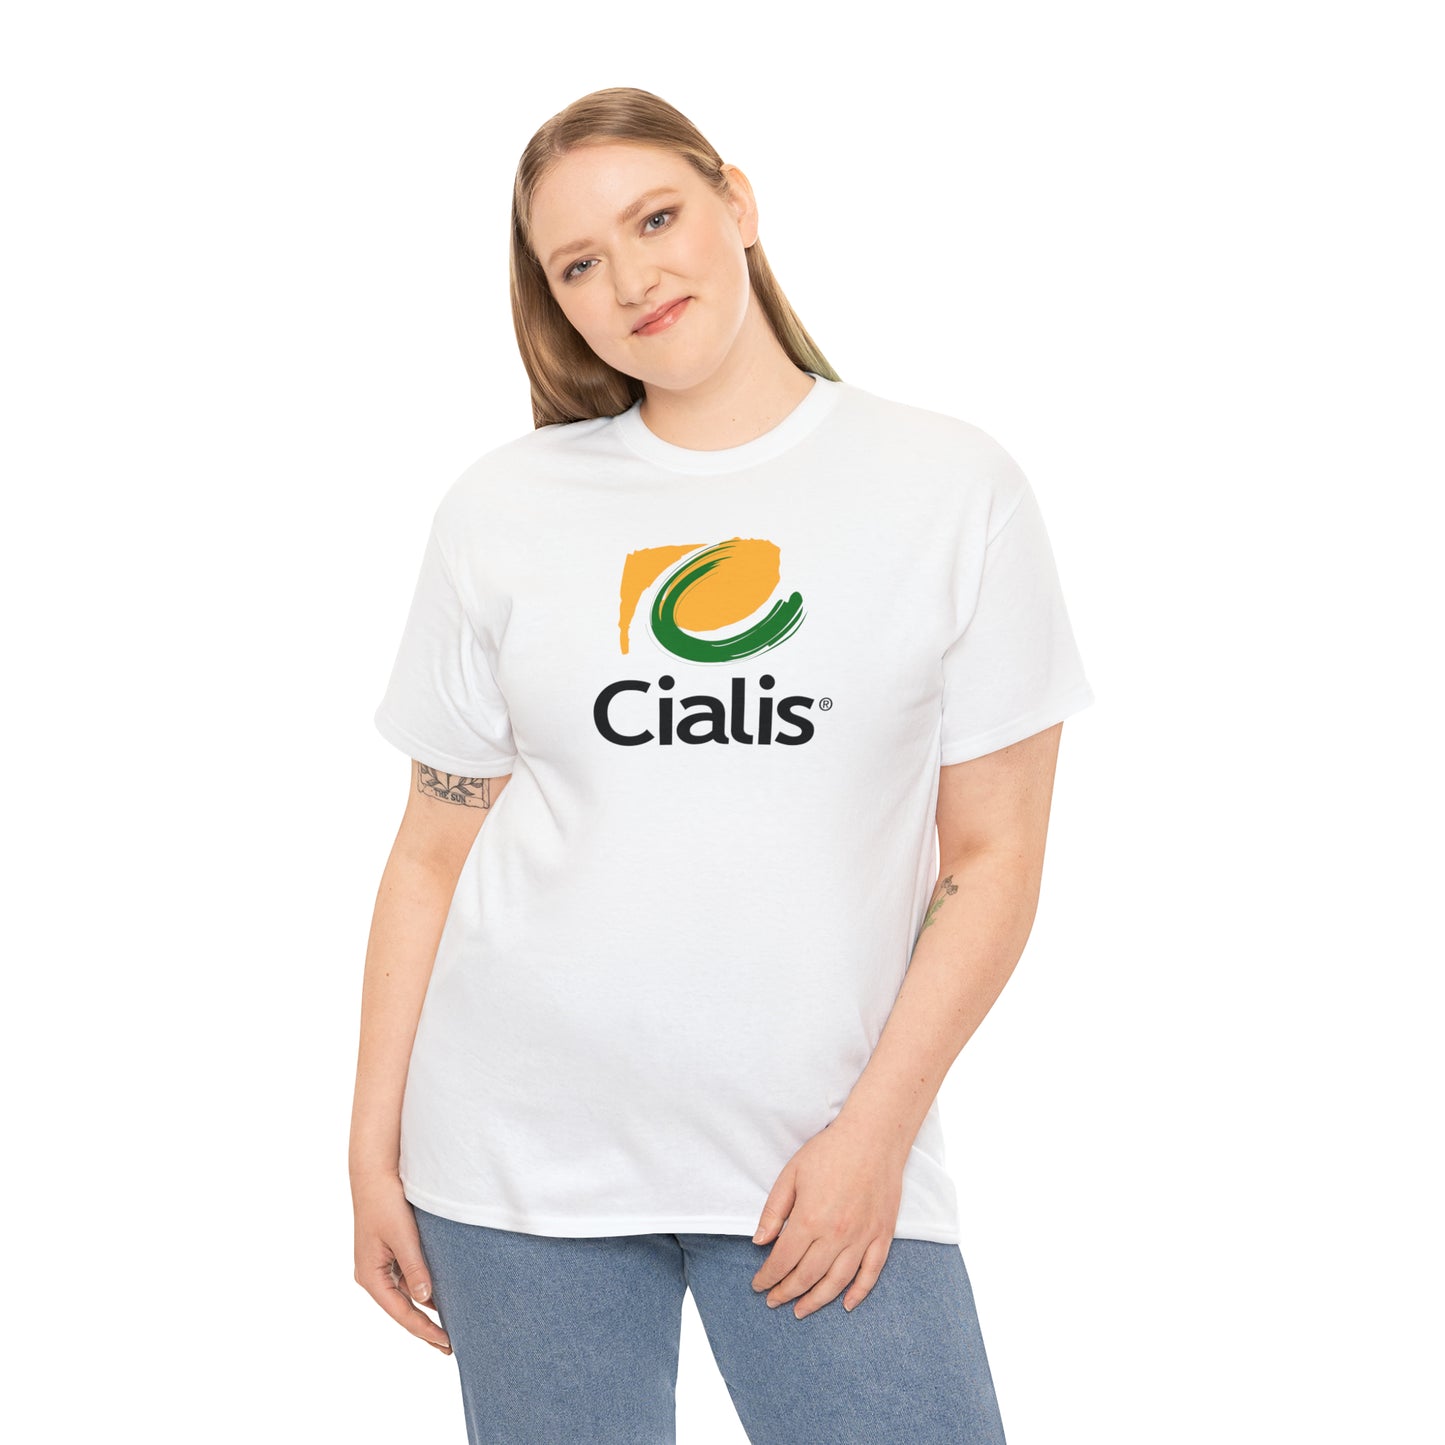 Cialis T-Shirt